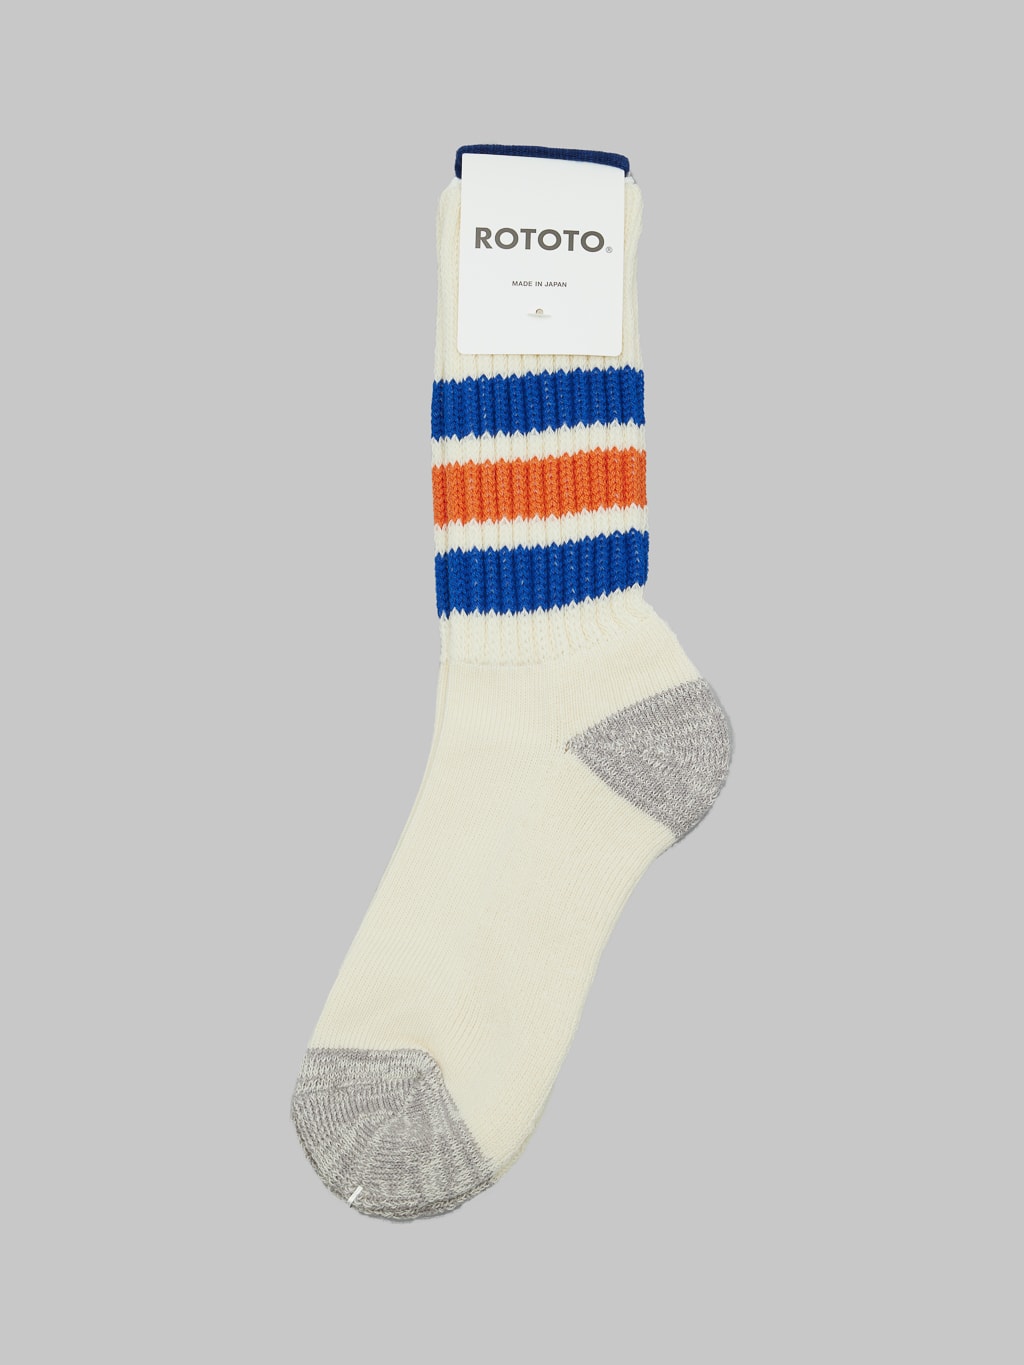 rototo oldschool crew socks blue orange 